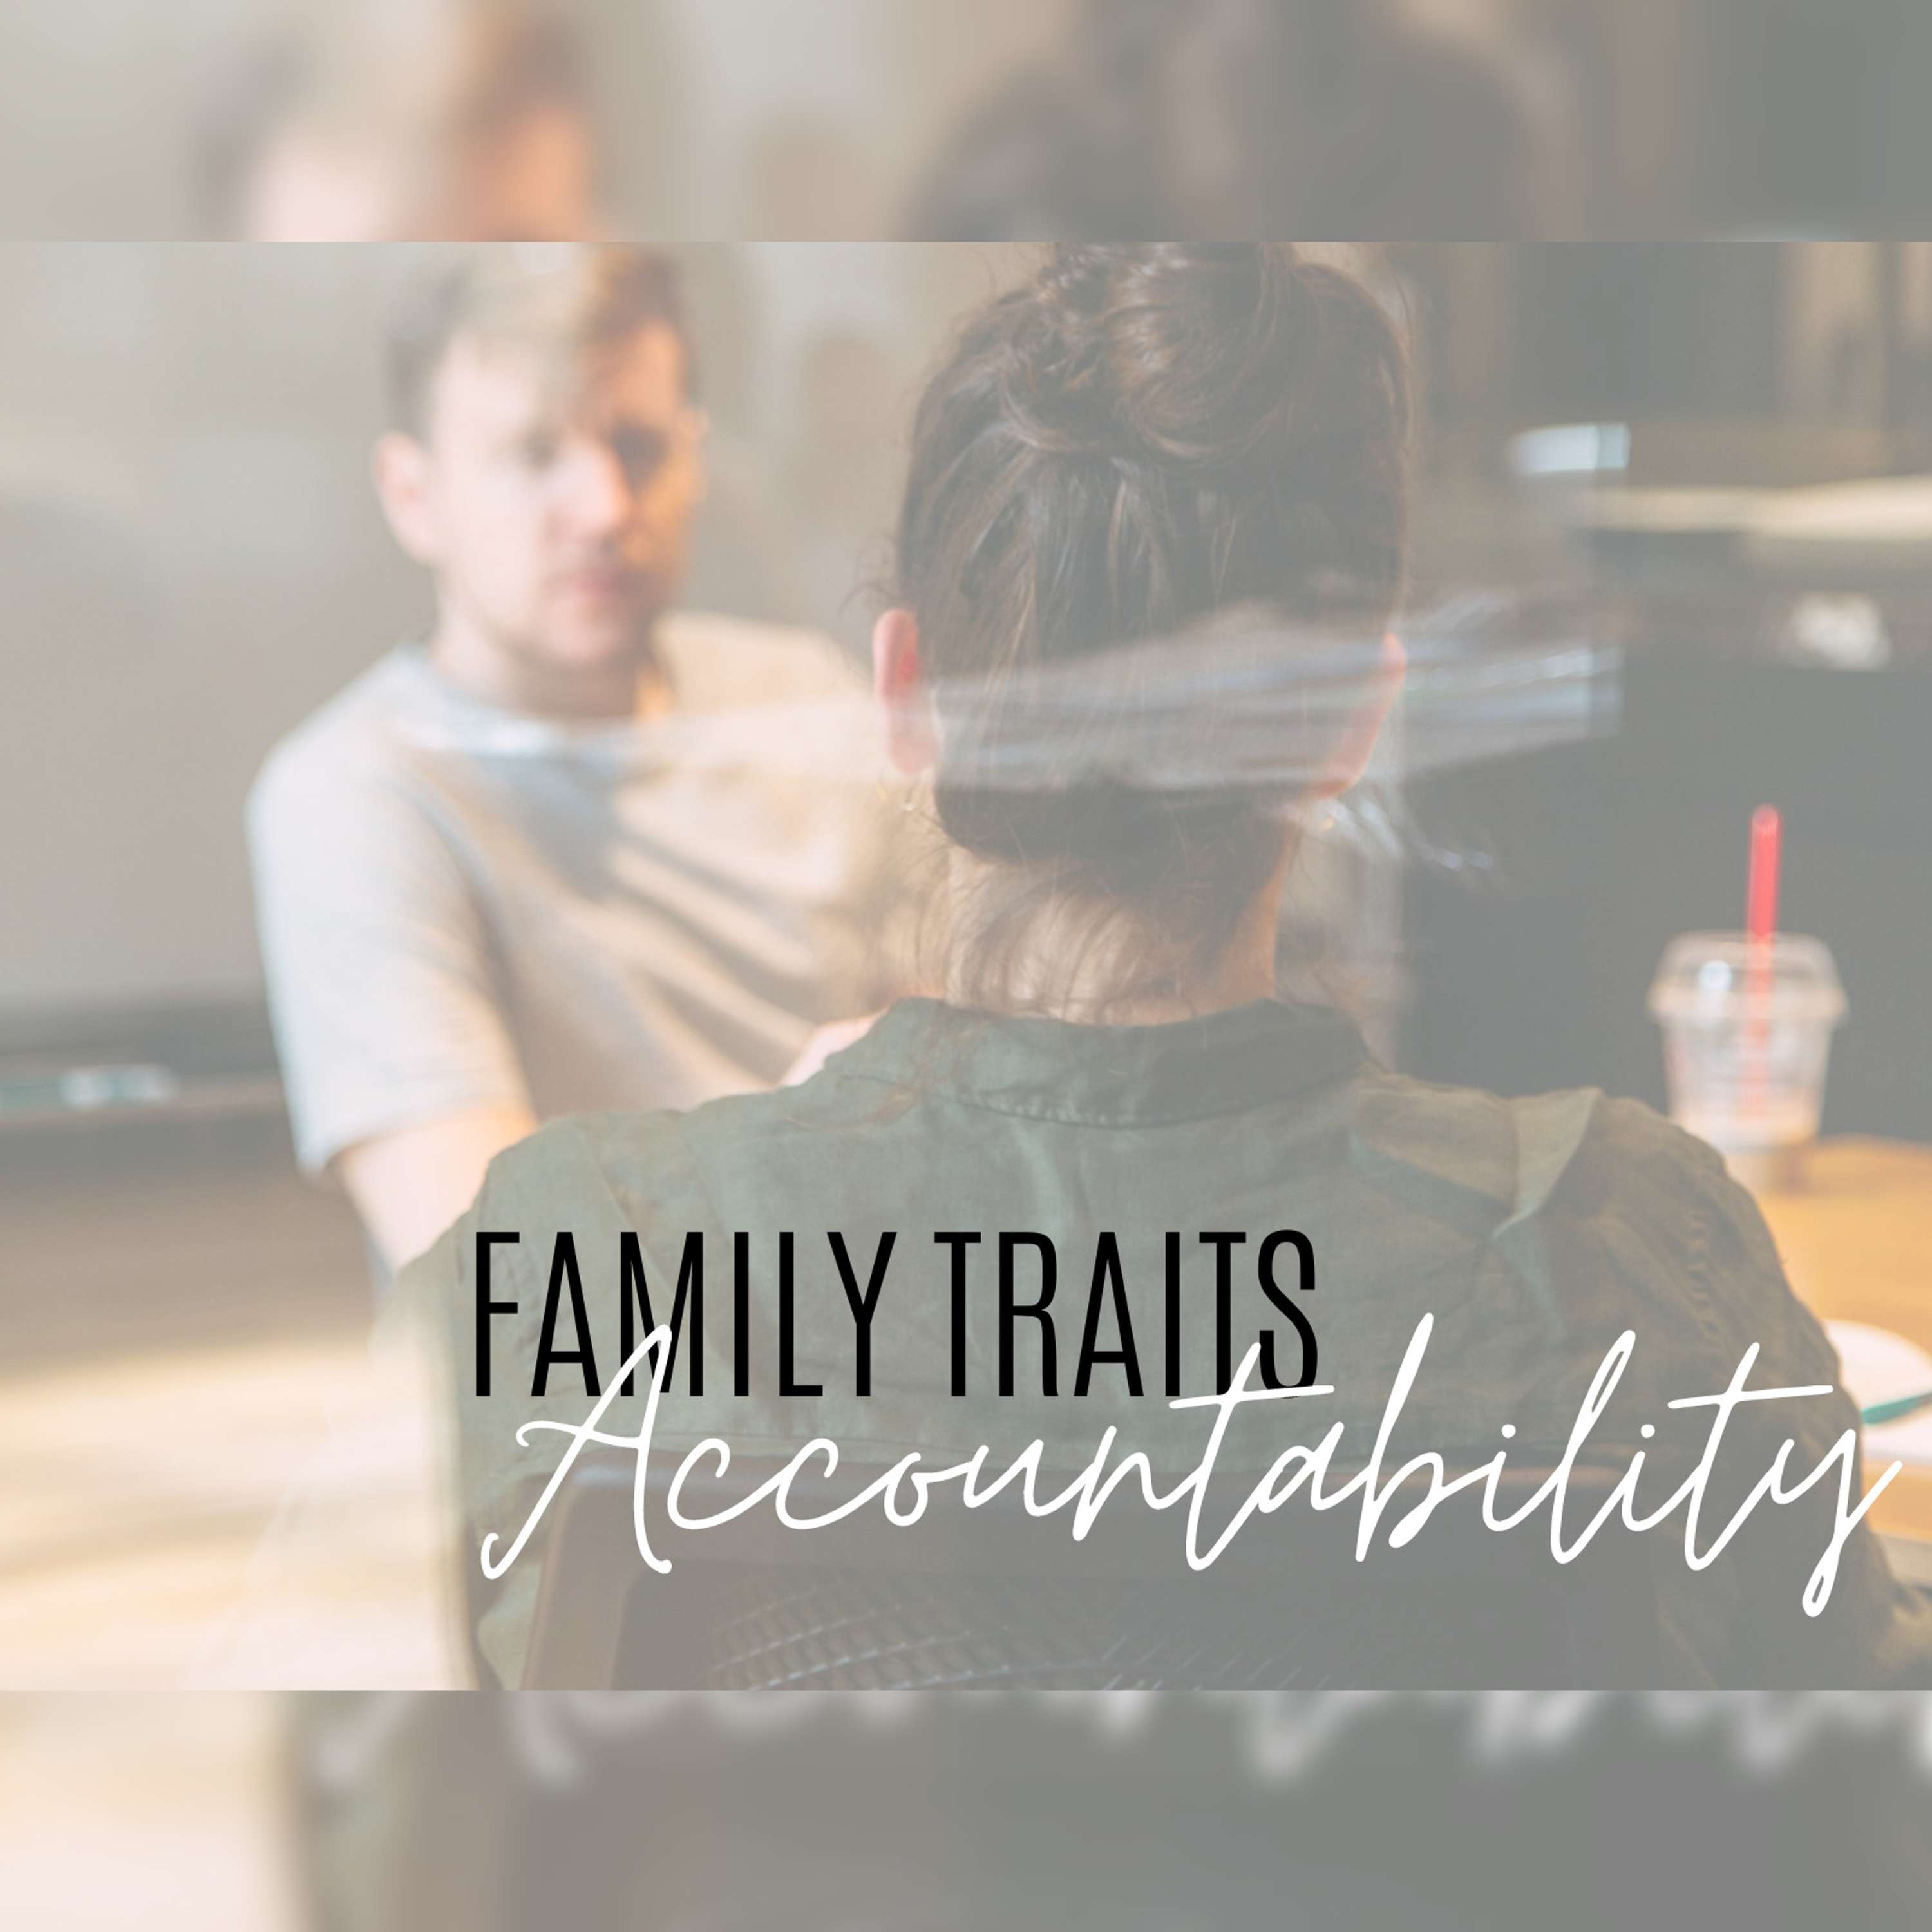 Family Traits Week 3 | Accountability